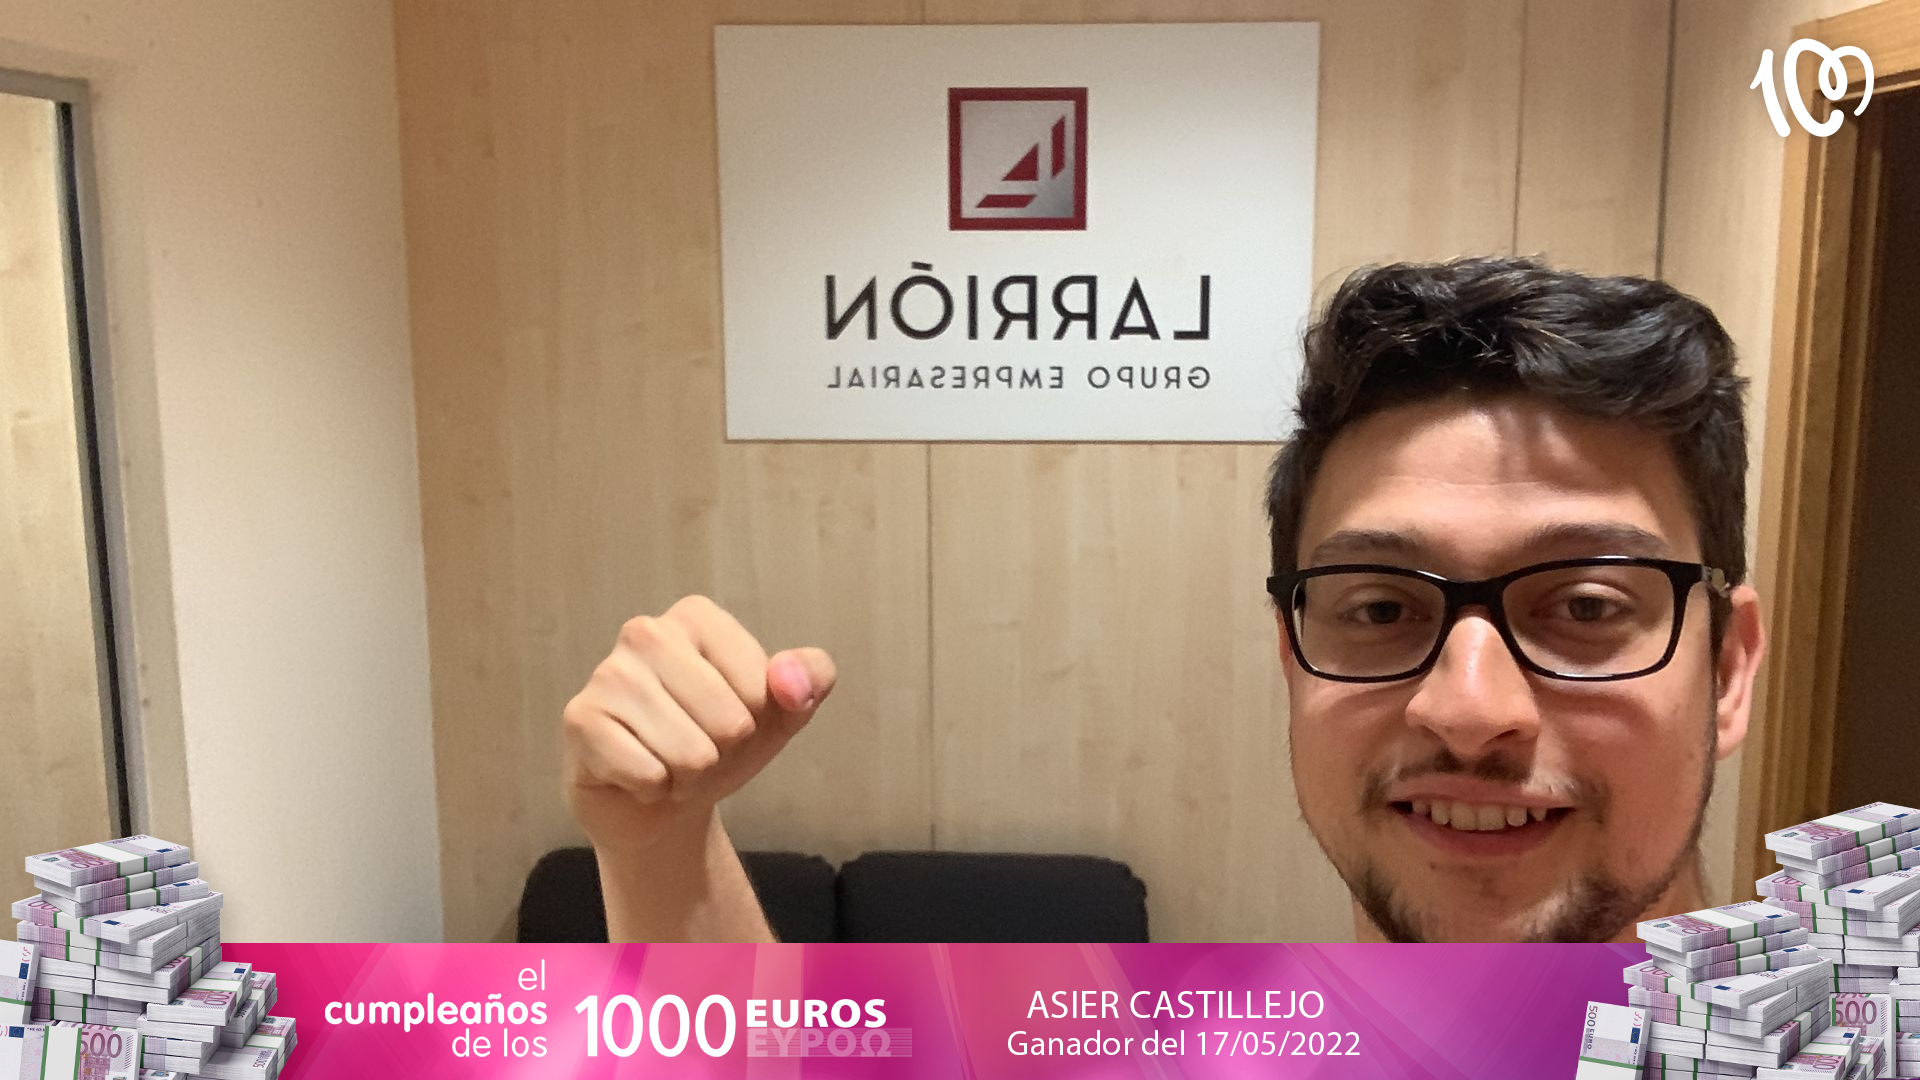 Asier gana 1.000 euros en CADENA 100: "Casi exploto al escuchar mi nombre"